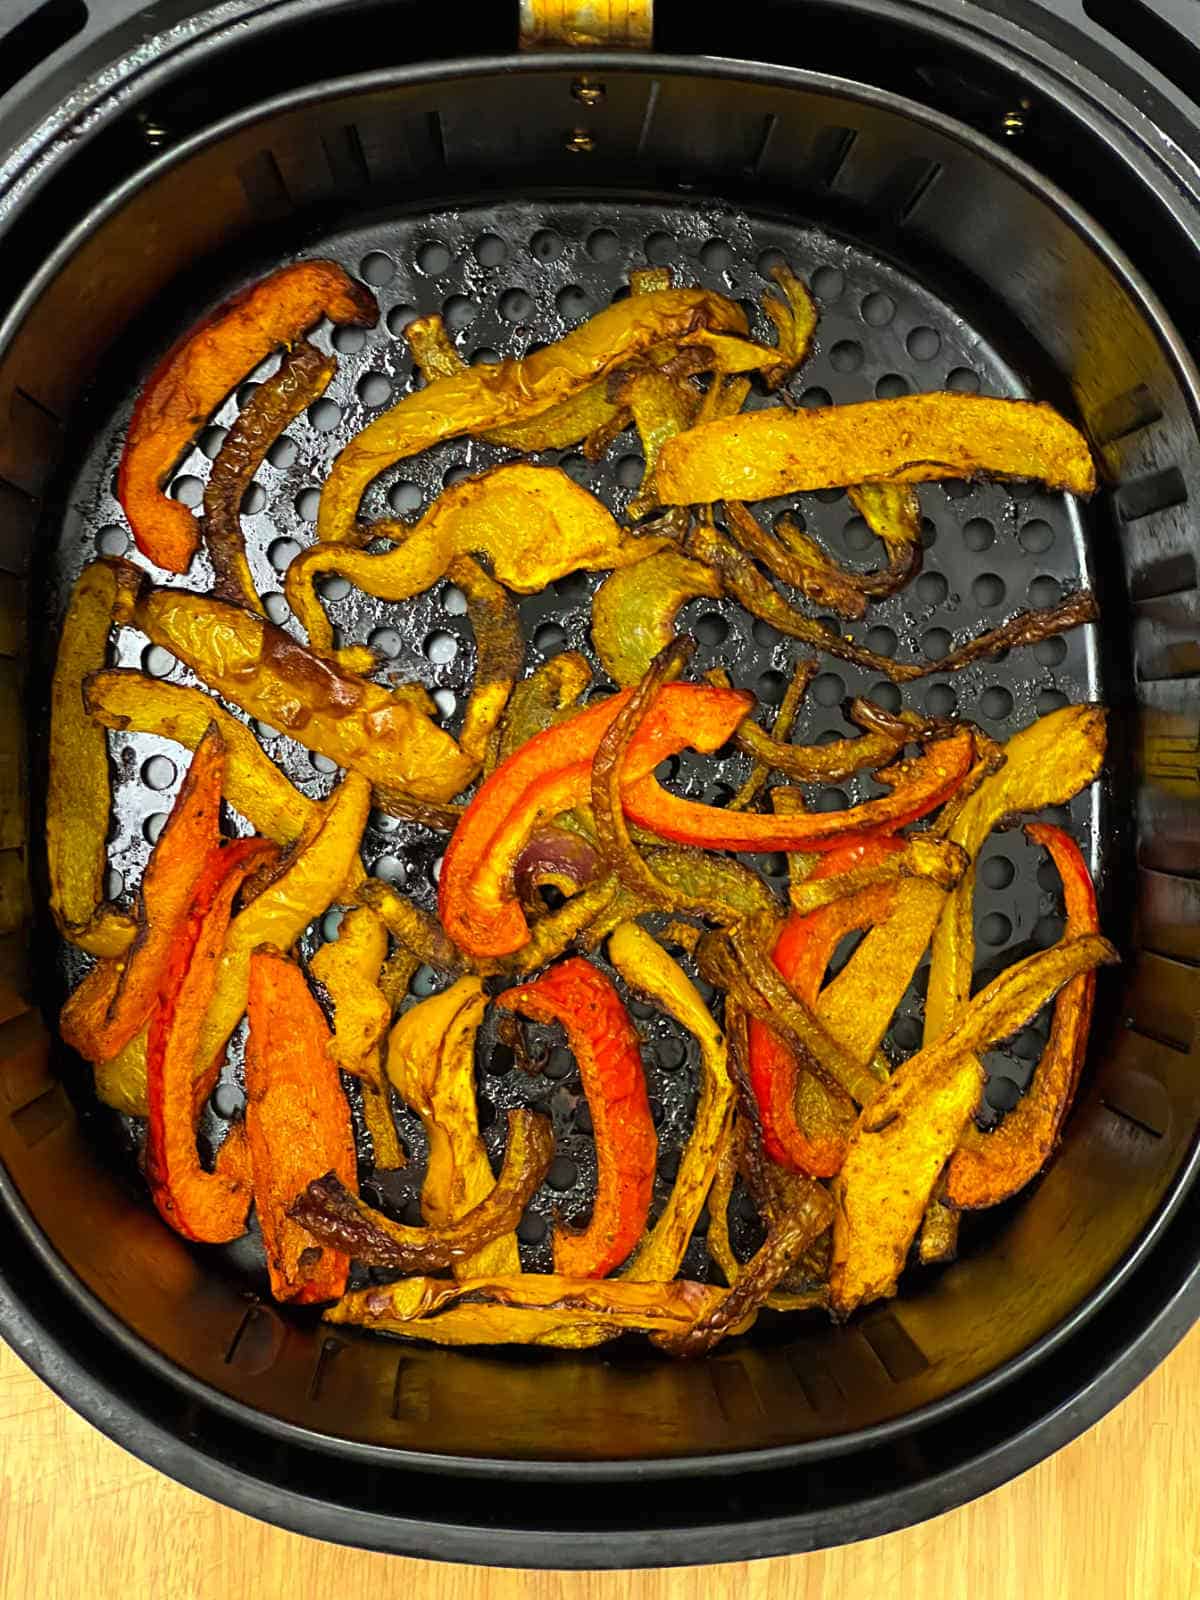 Roasted bell peppers in air fryer basket.